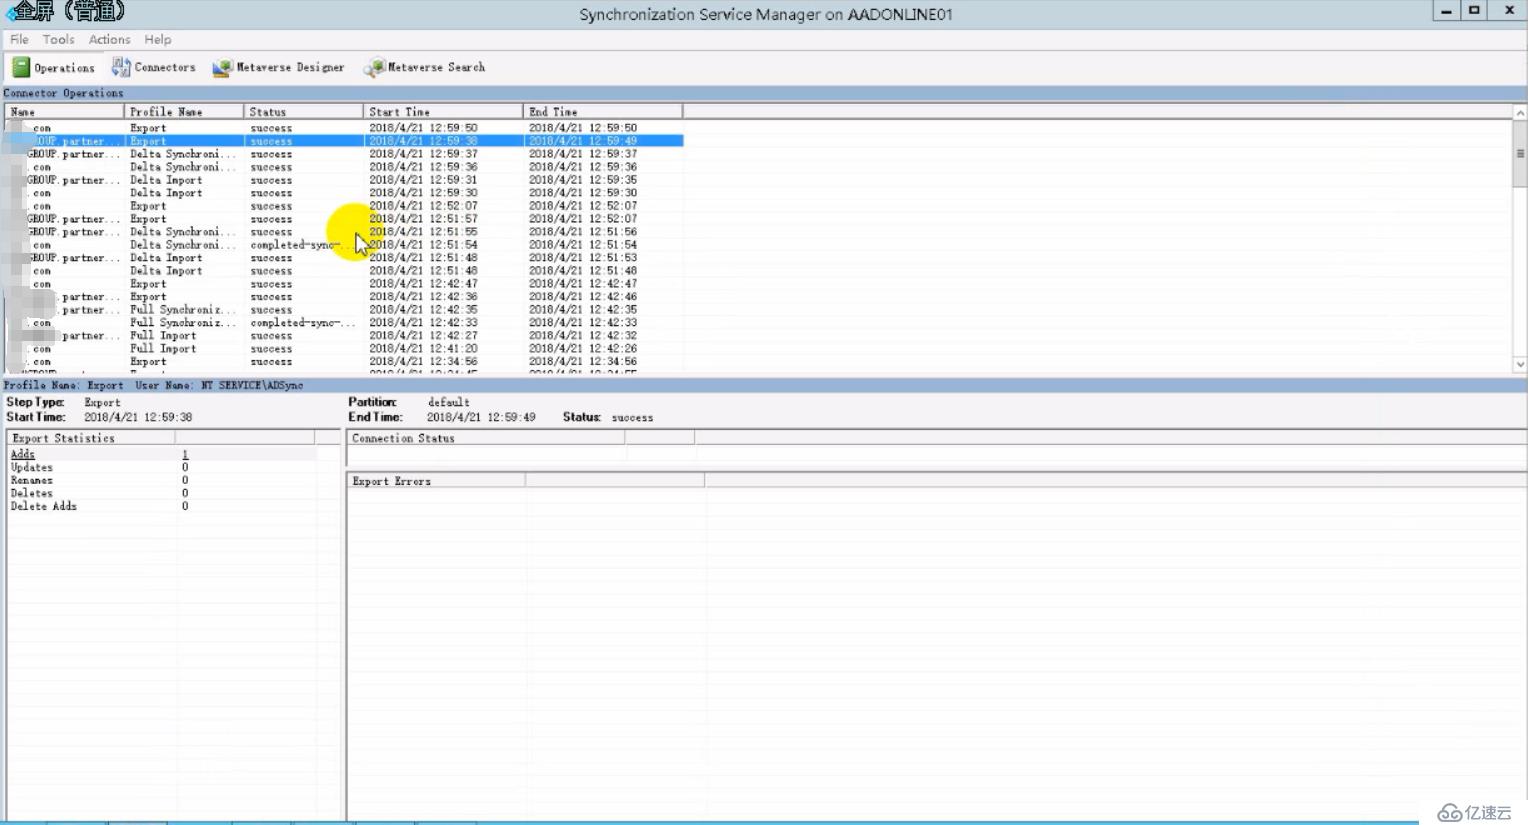 Exchange 2013CU17和office 365混合部署-安装配置AAD Connet（二）